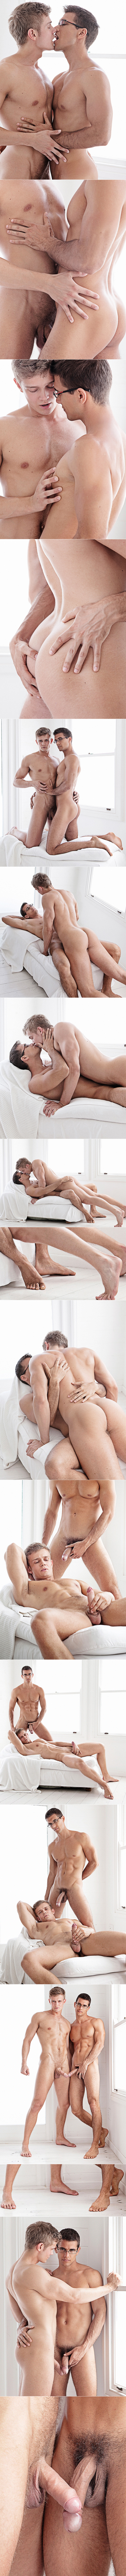 BelAmi Dylan Rosser Jason Clark Tom Pollock European Gay Porn Closeup Male Feet Toes Big Uncut Cocks Photoshoot Hairy Legs